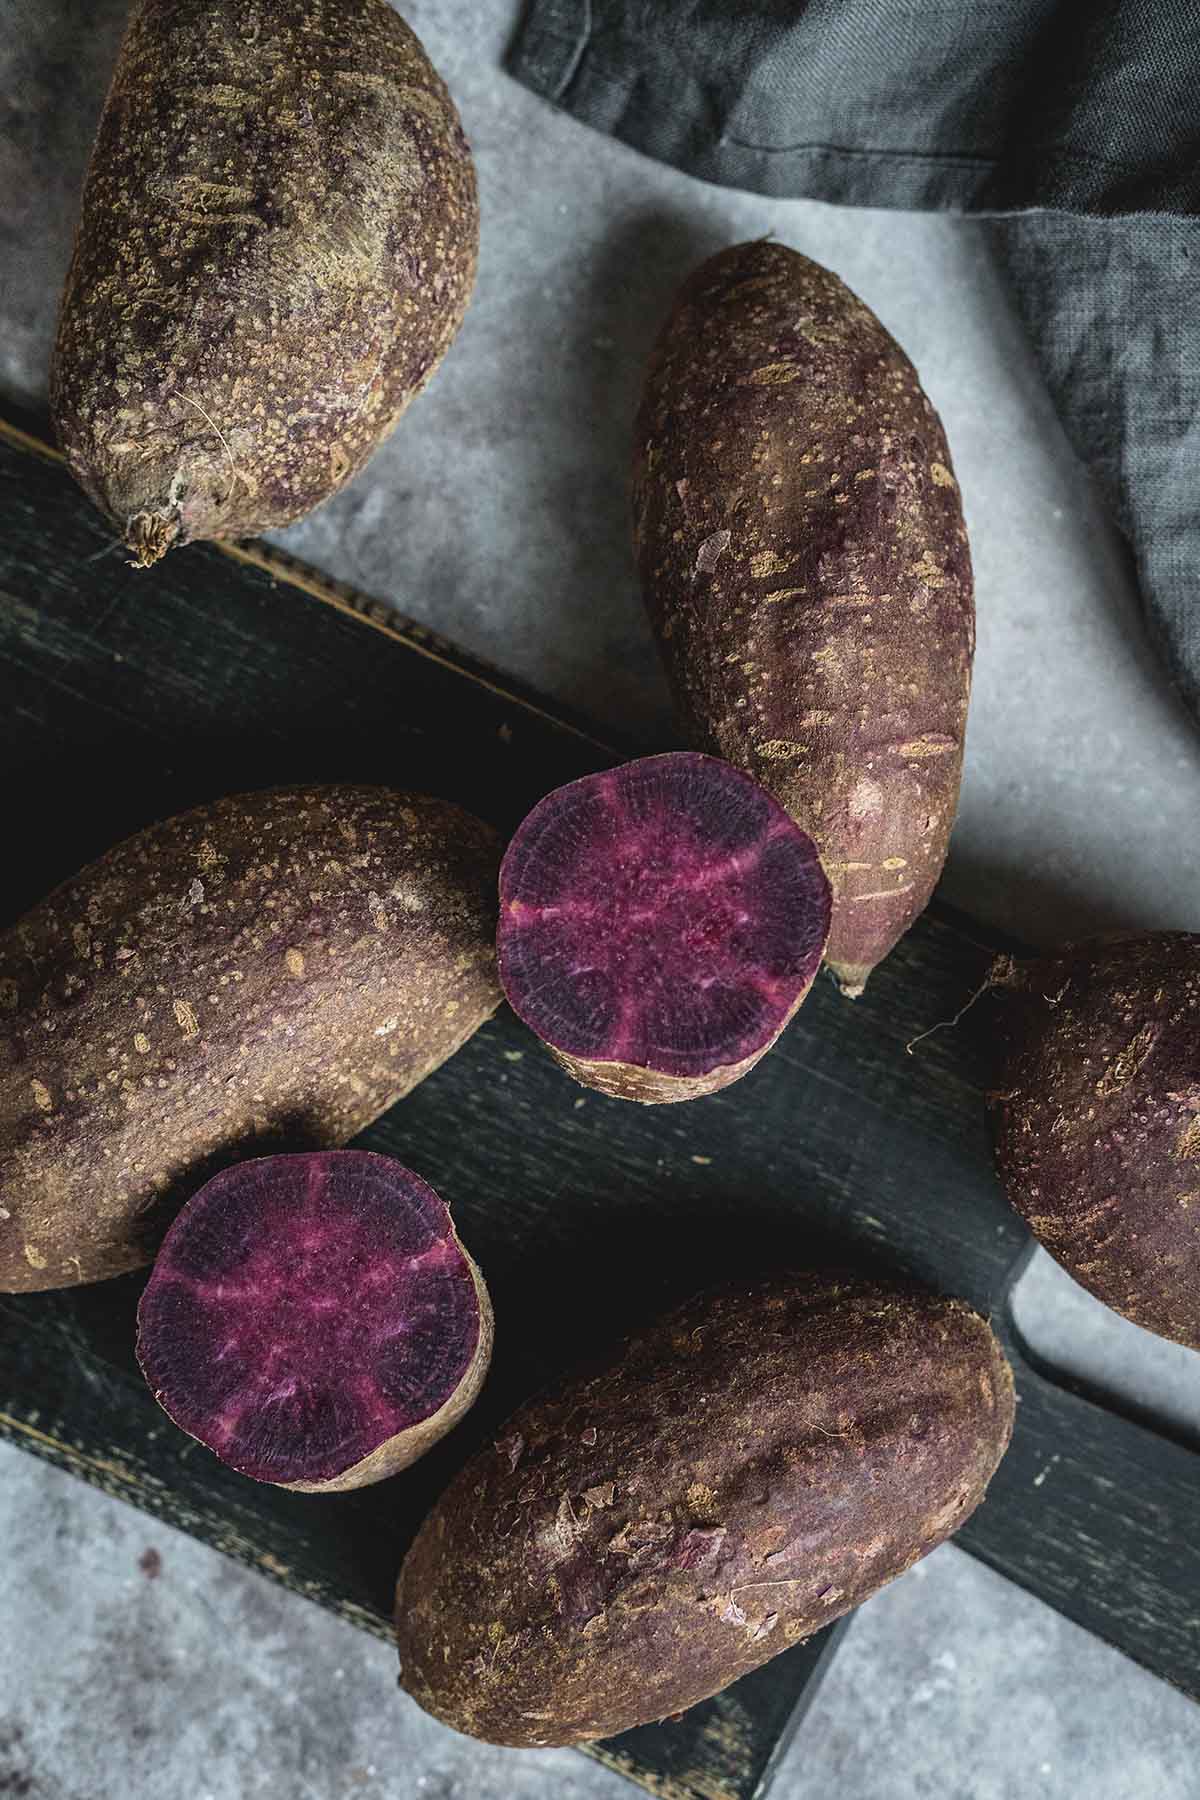 How to cook purple sweet potatoes